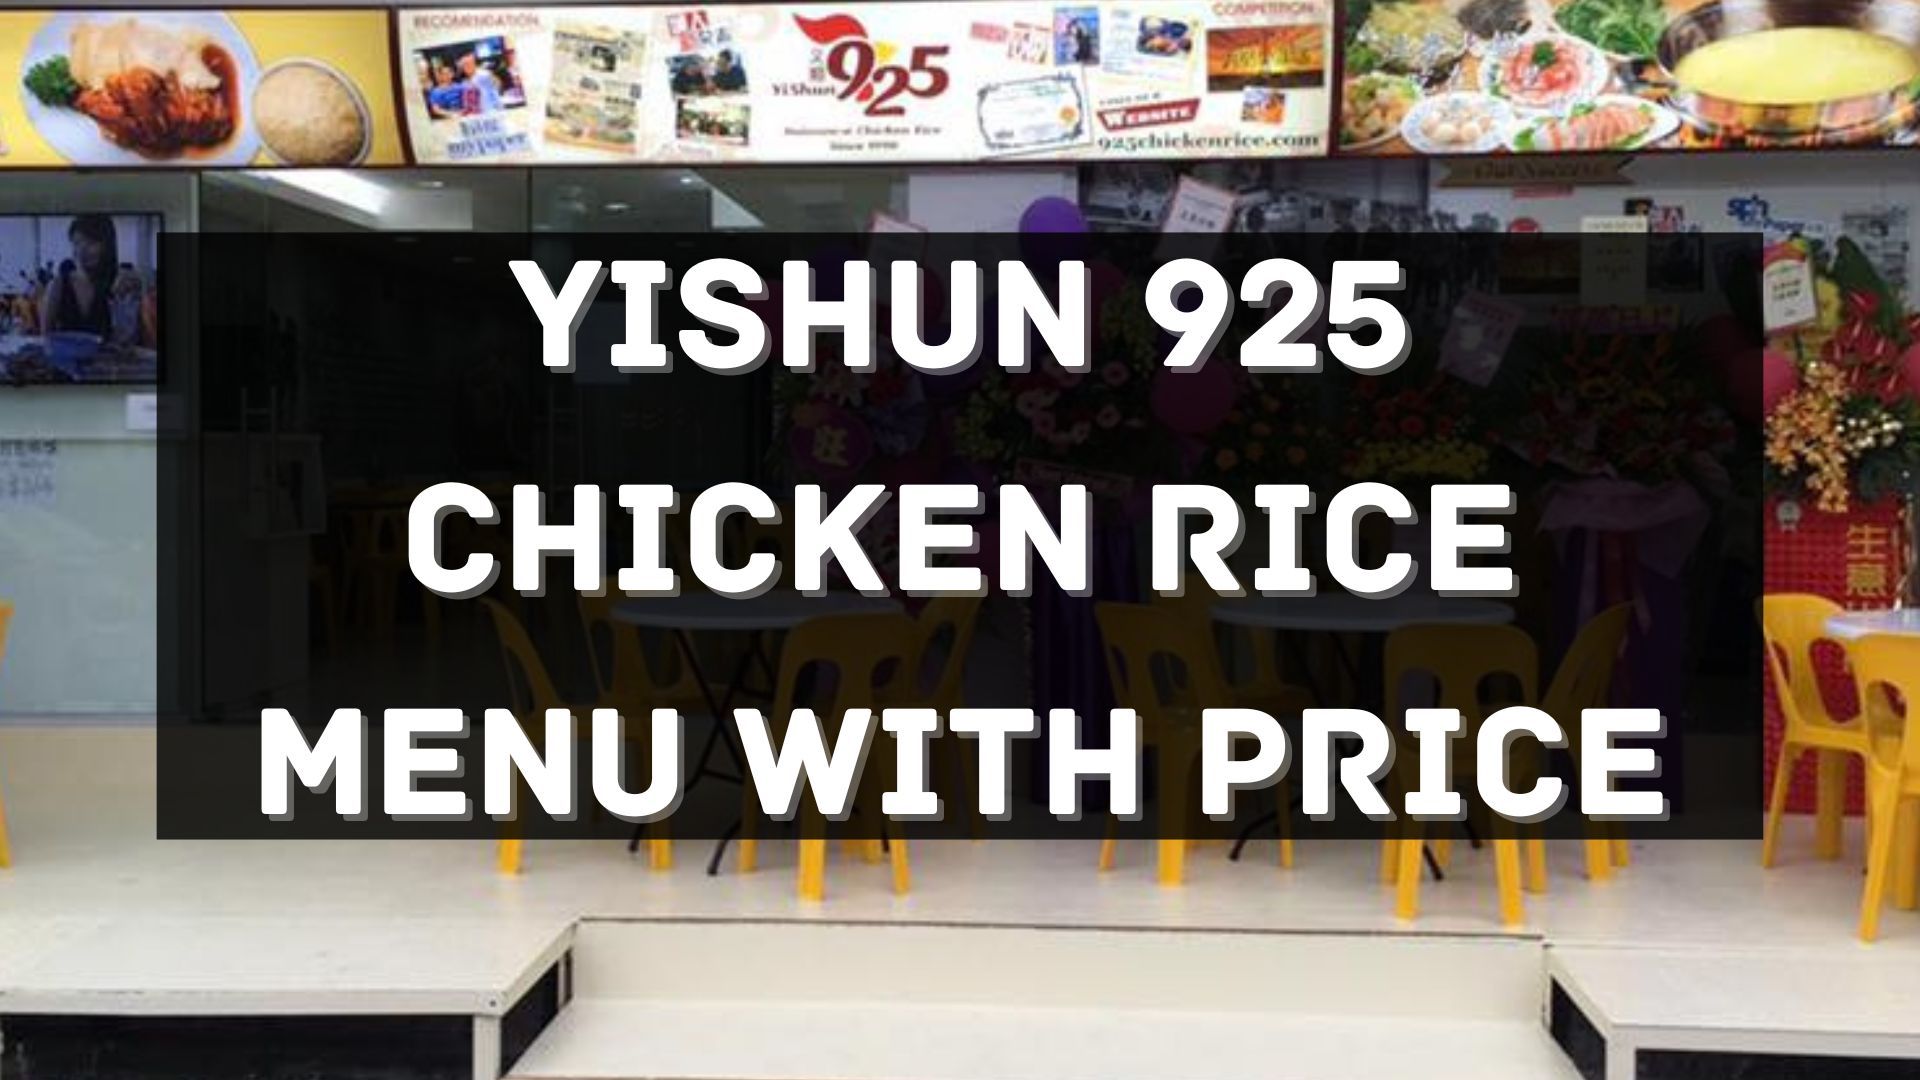 yishun 925 chicken rice menu prices singapore